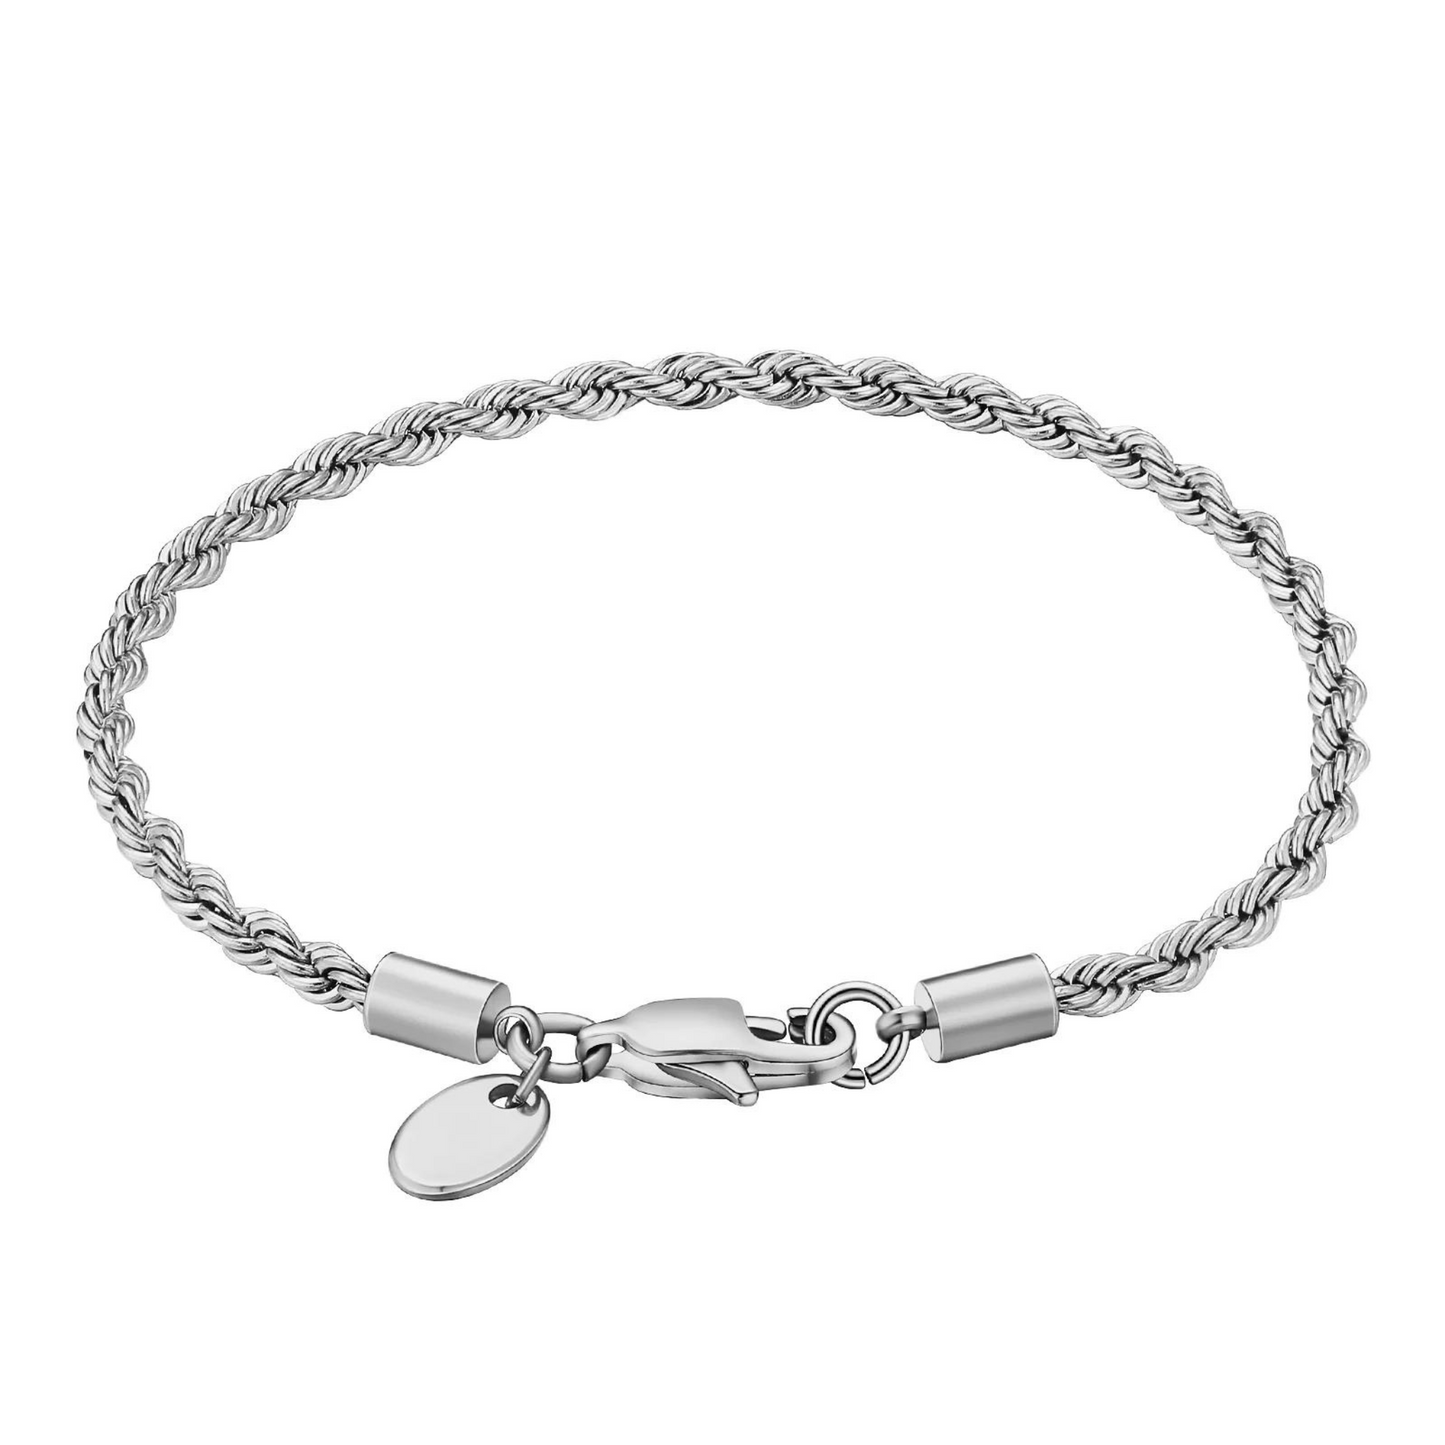 Rope Chain Bracelet (Silver) 3mm